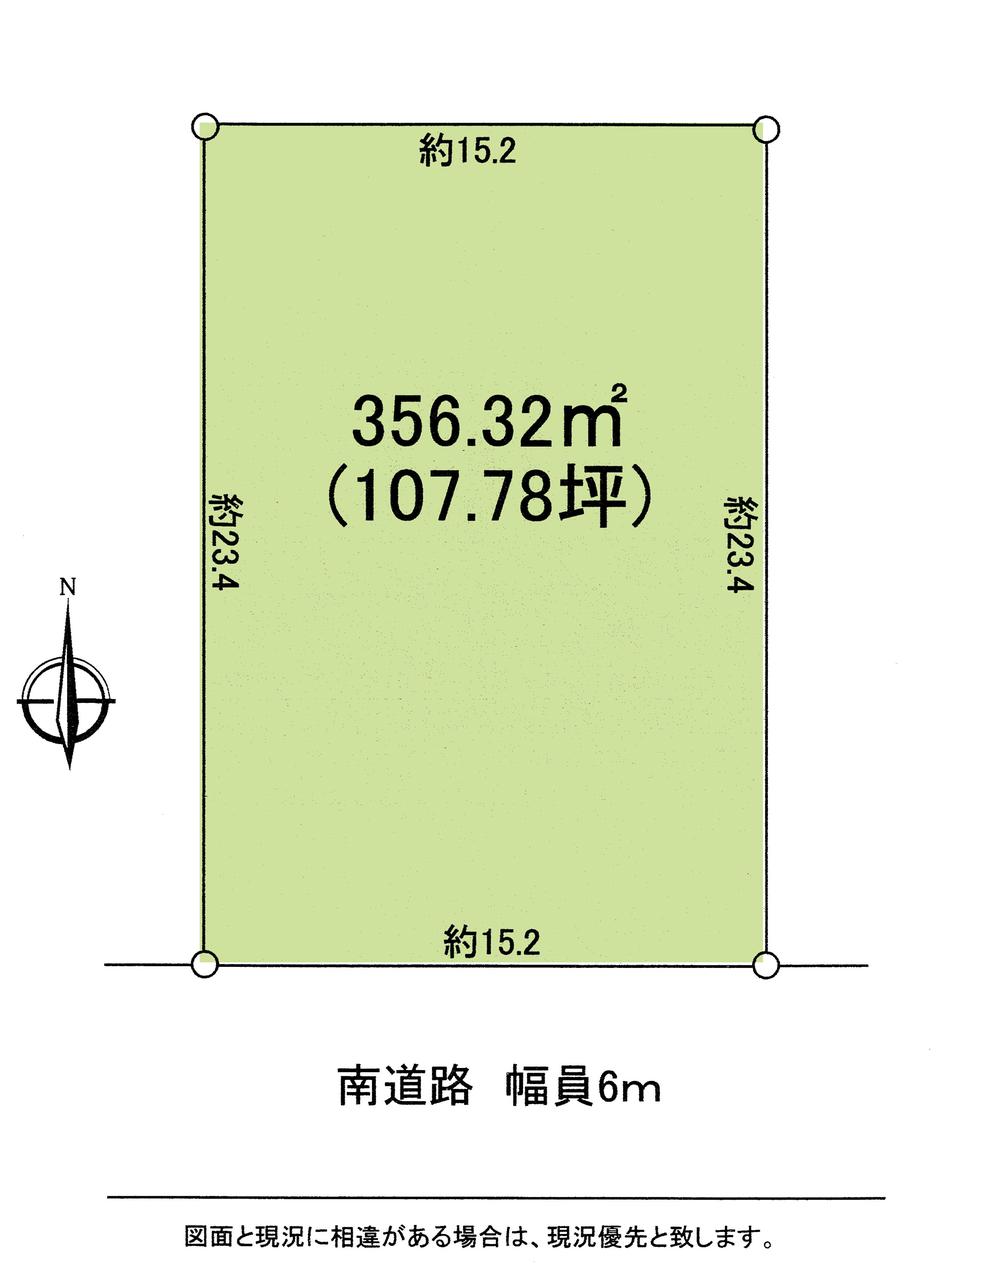 Compartment figure. Land price 24,800,000 yen, Land area 356.32 sq m compartment view